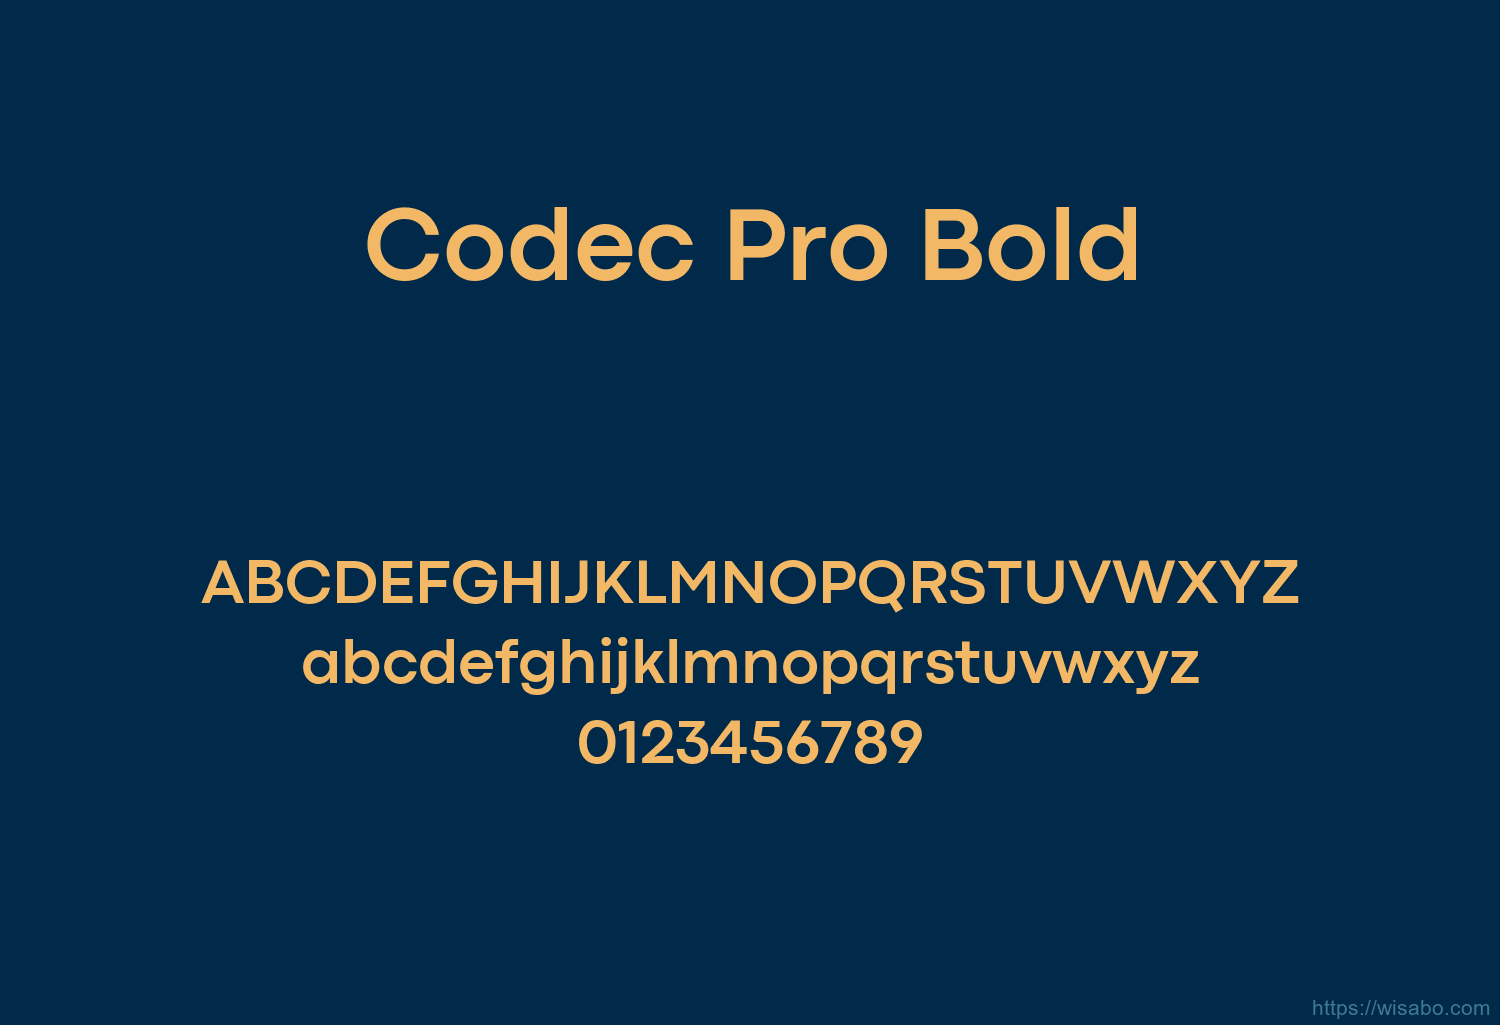 Codec Pro Bold